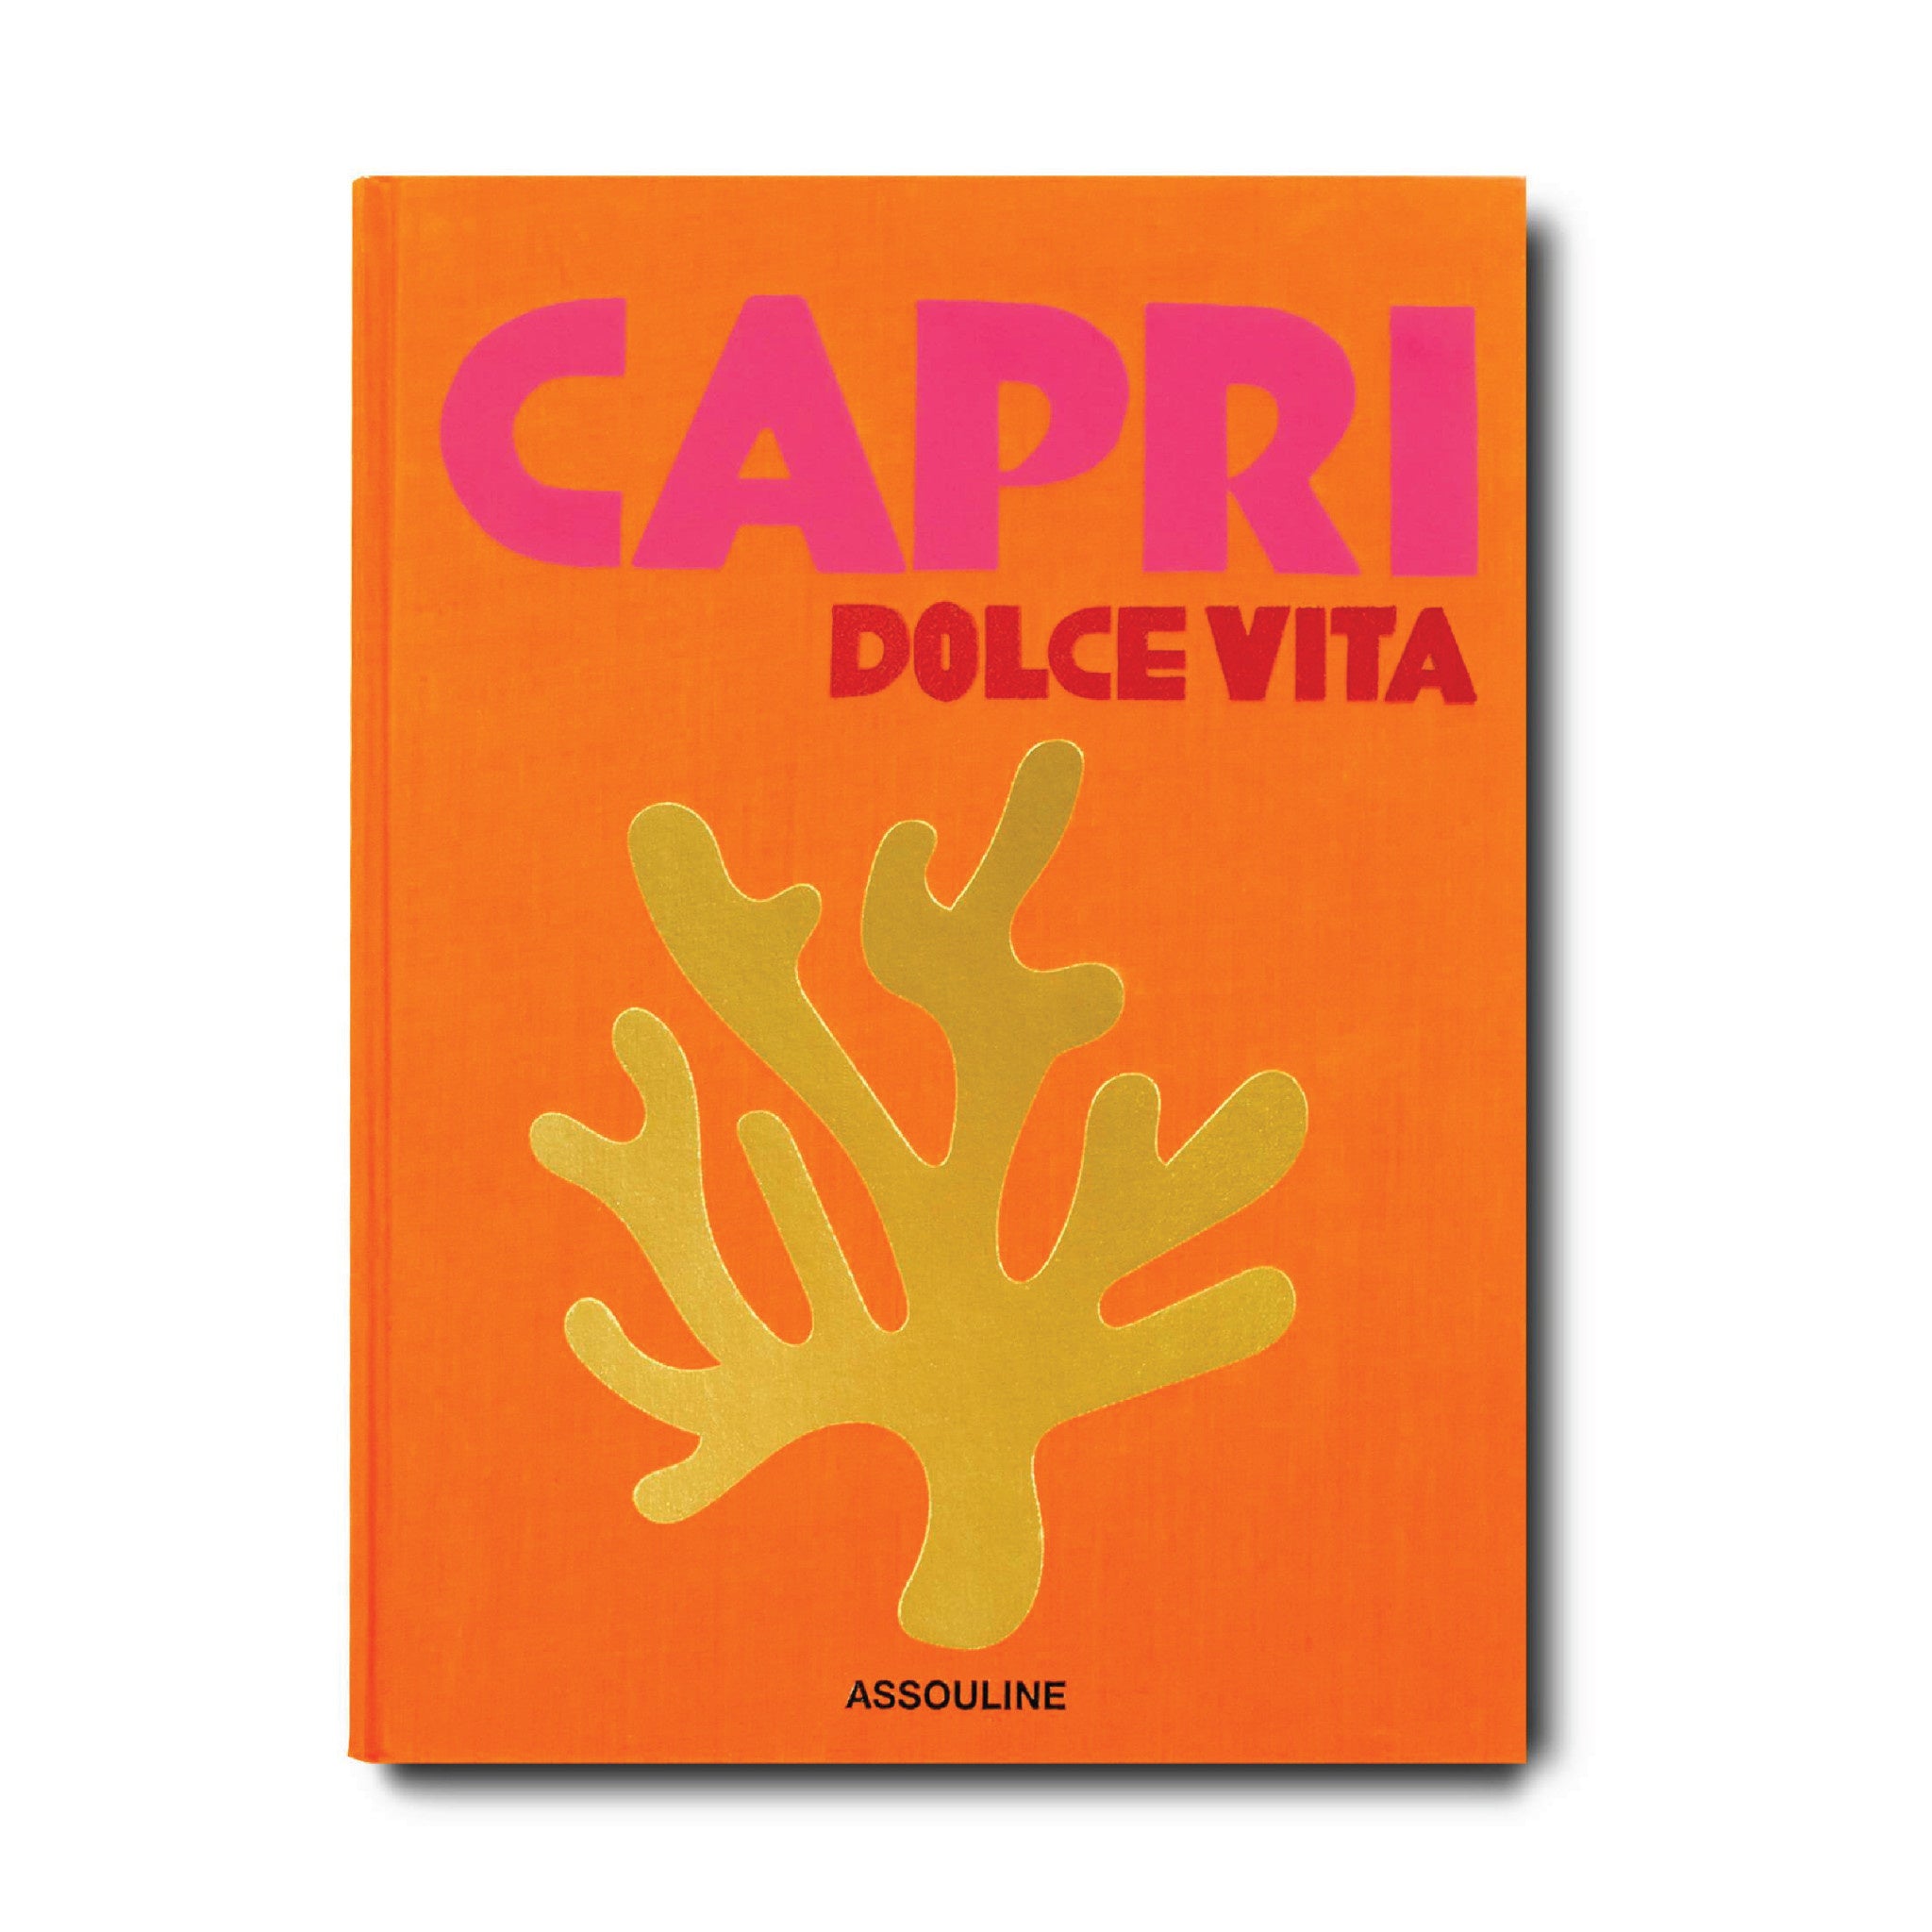 Capri Dolce Vita - Wynwood Walls Shop